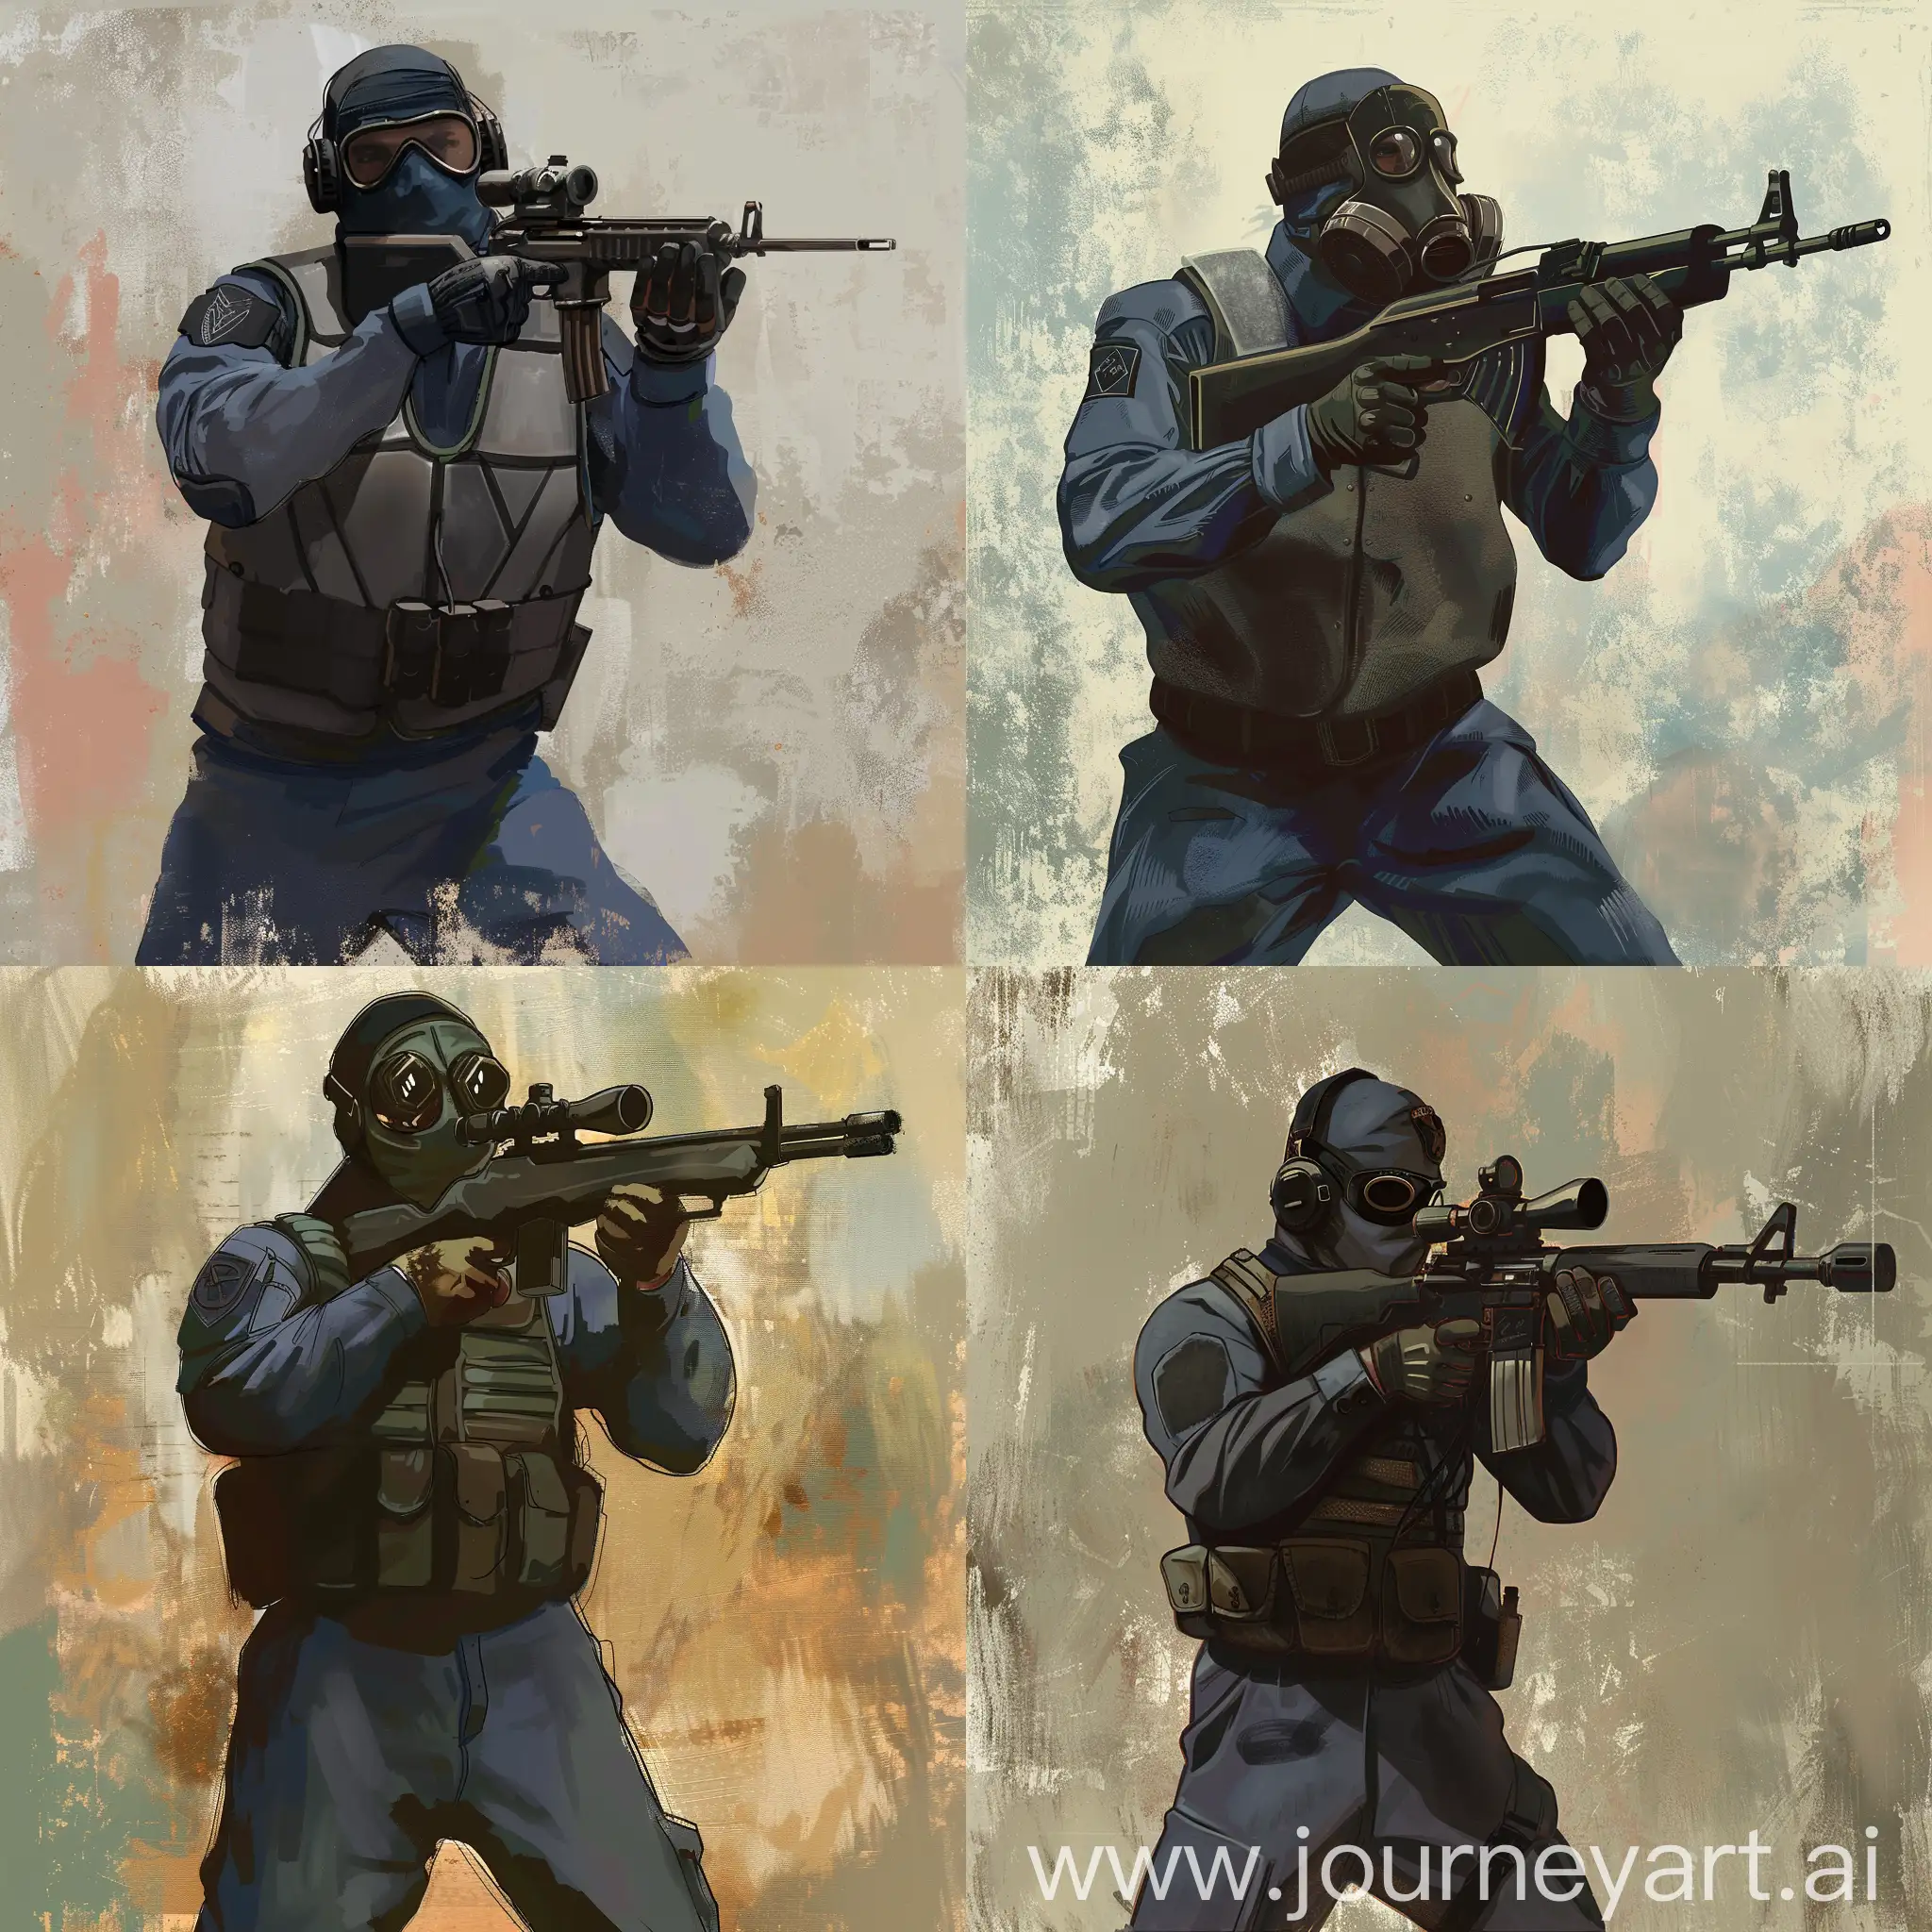 Vietnam-War-Soldier-with-Sniper-Rifle-and-Bulletproof-Vest